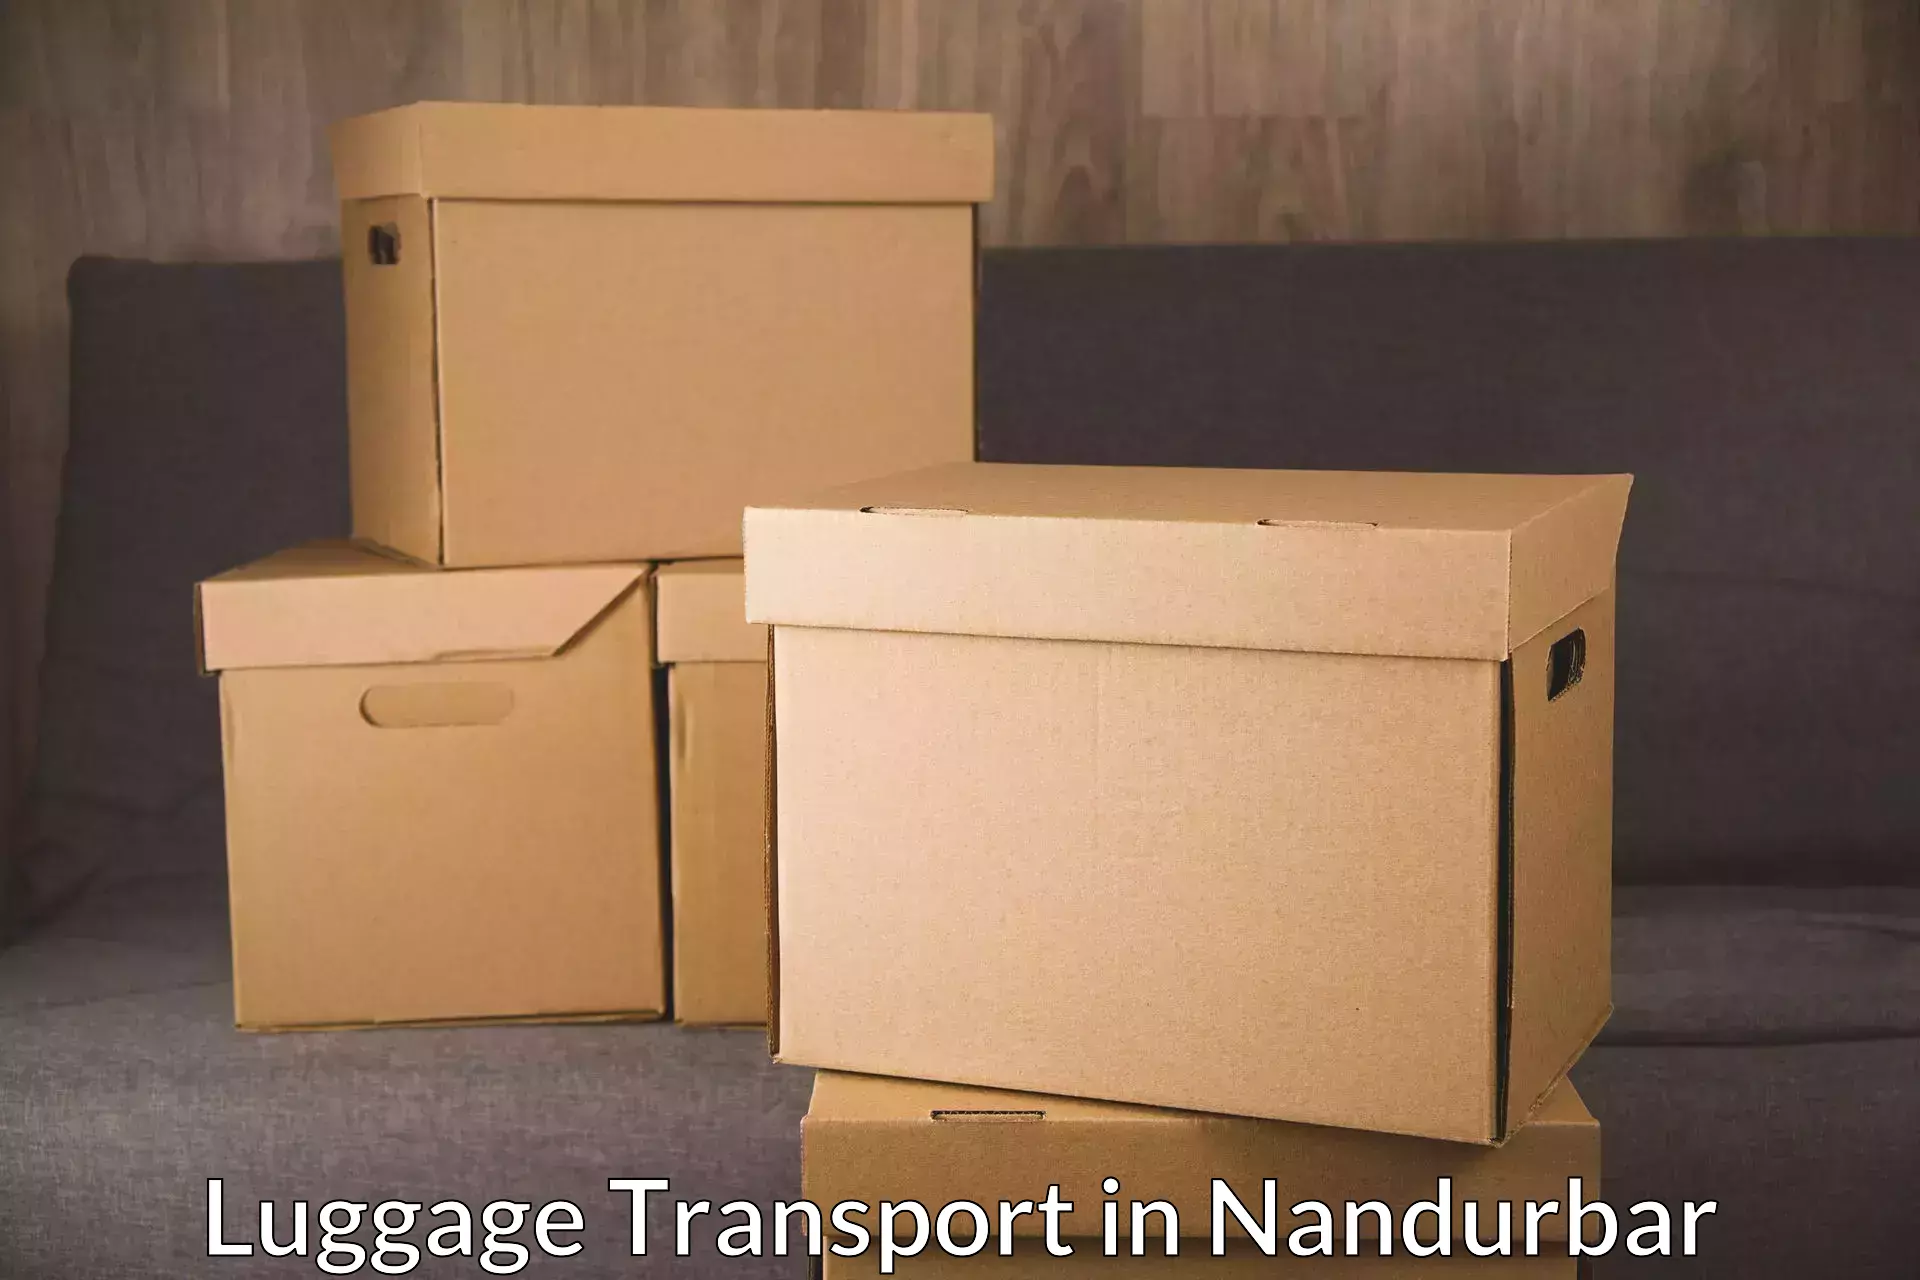 Heavy luggage shipping in Nandurbar